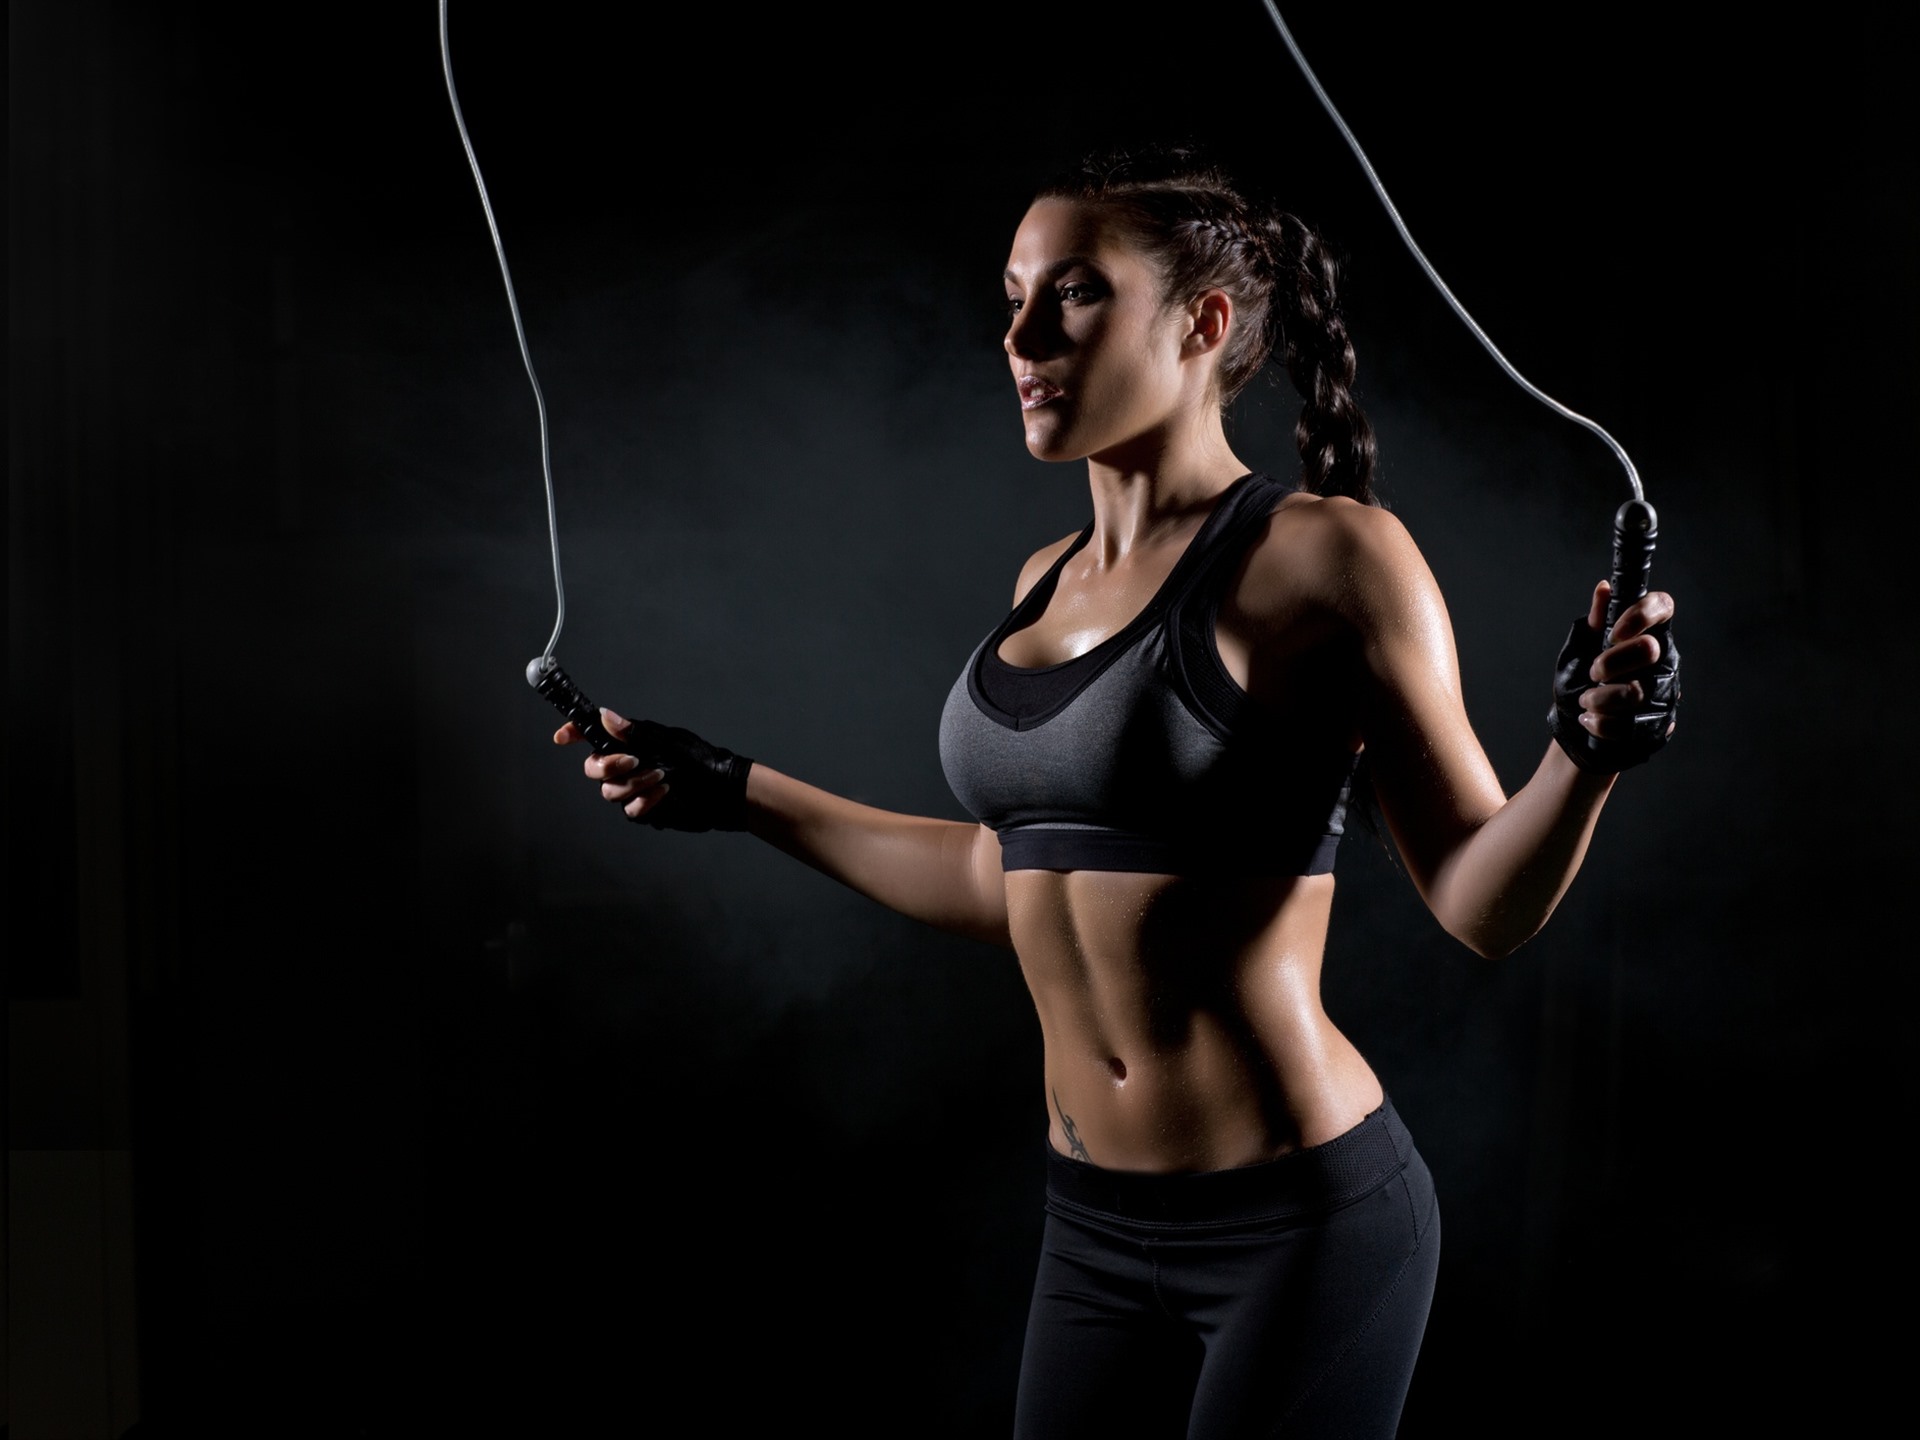 [Image: Fitness-girl-black-background-rope-skipp...0.2&view=1]